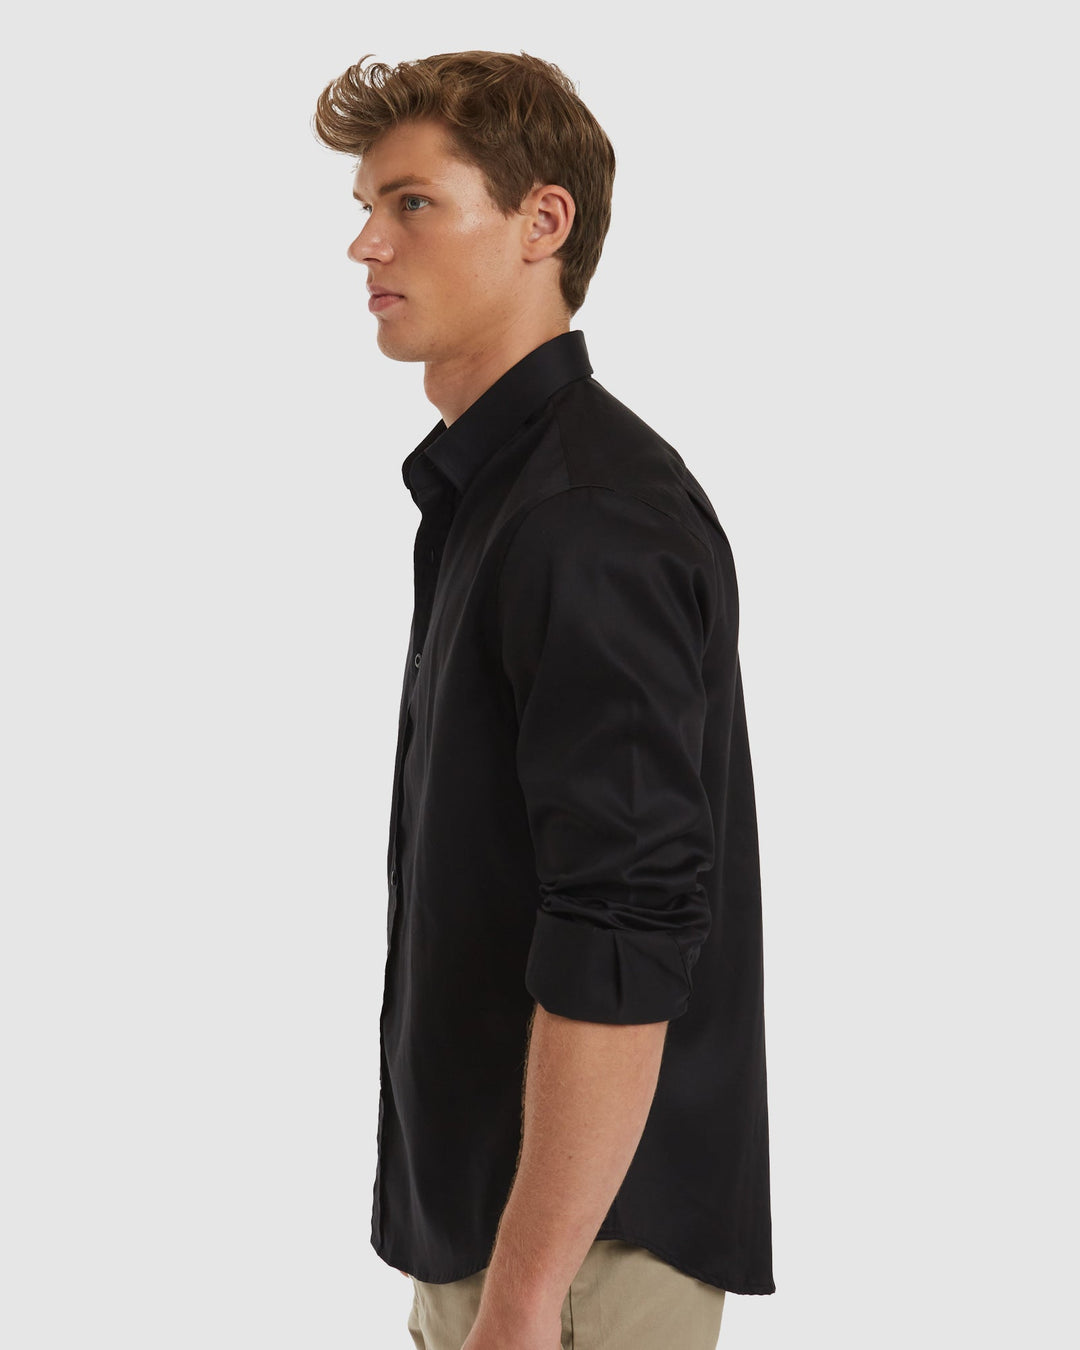 London-Slim Formal Black Non Iron Cotton Shirt